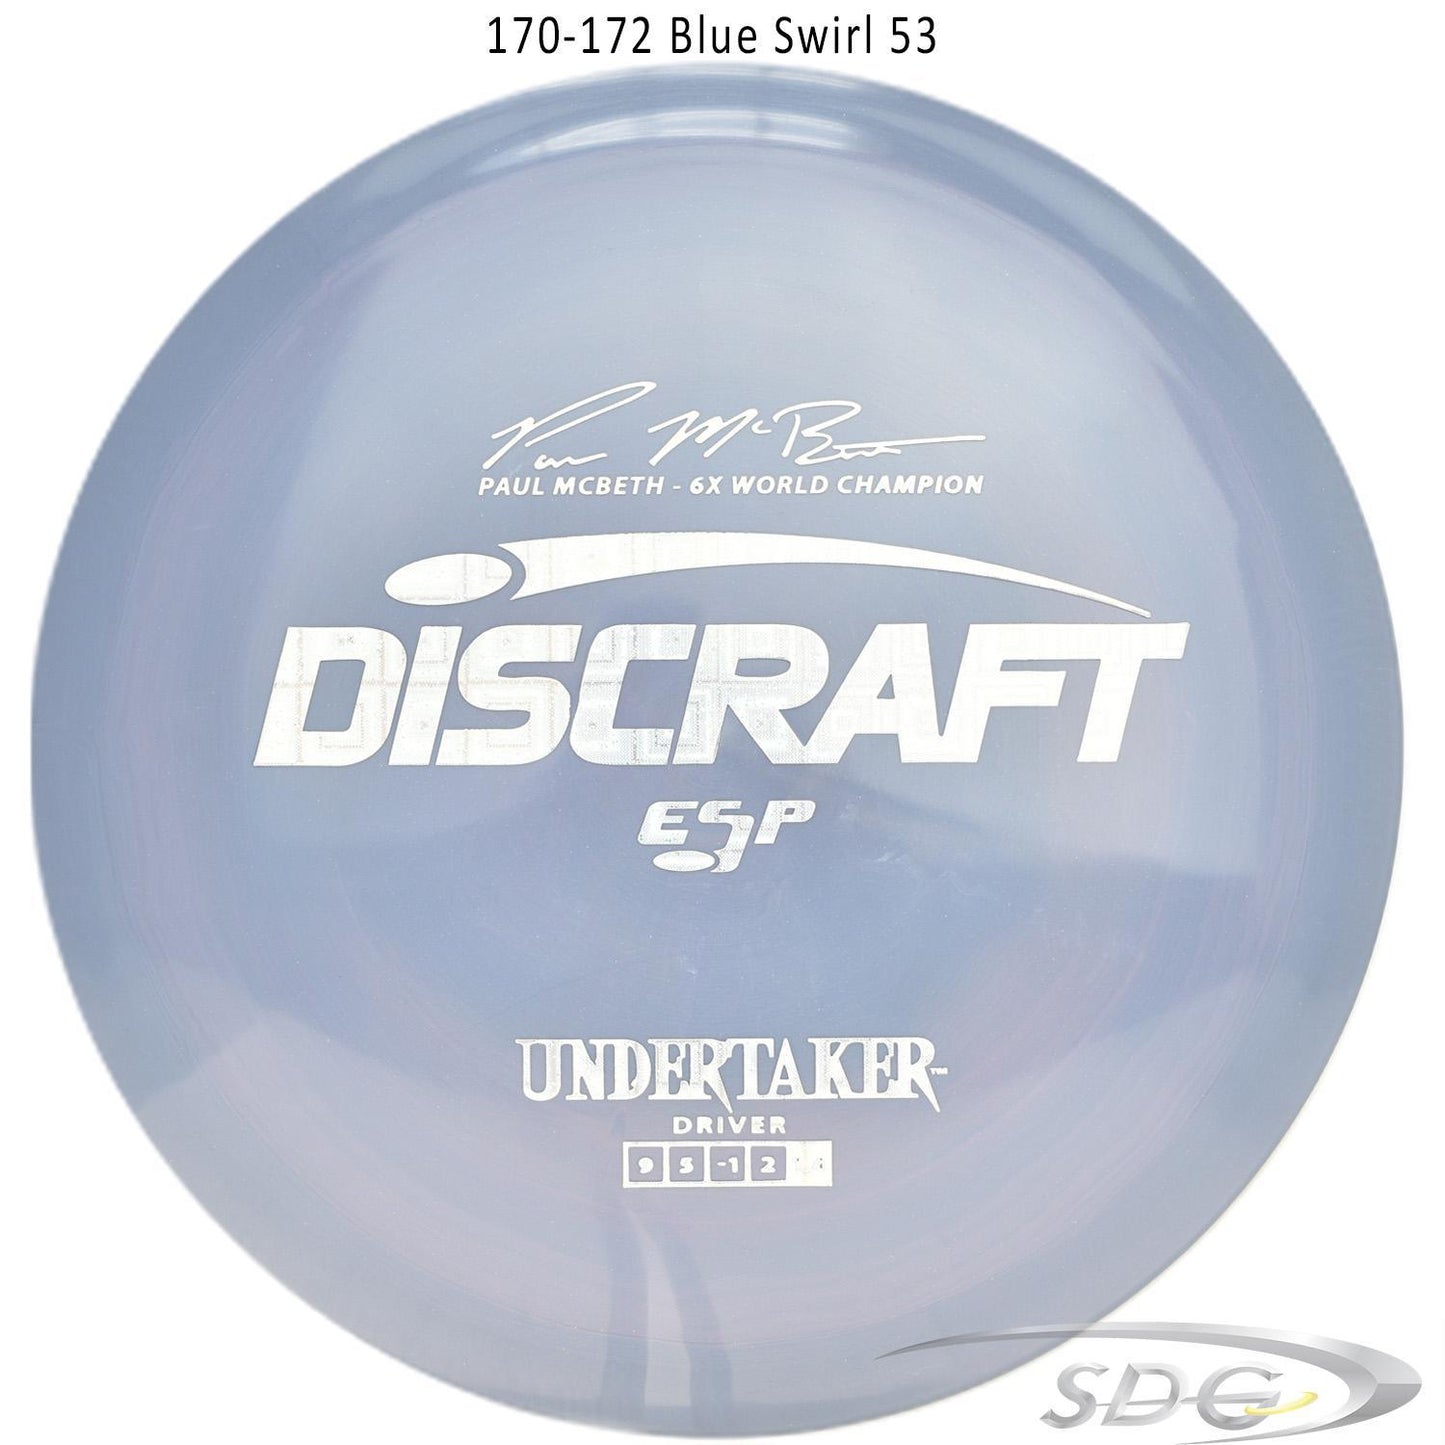 discraft-esp-undertaker-6x-paul-mcbeth-signature-series-disc-golf-distance-driver-172-170-weights 170-172 Blue Swirl 53 